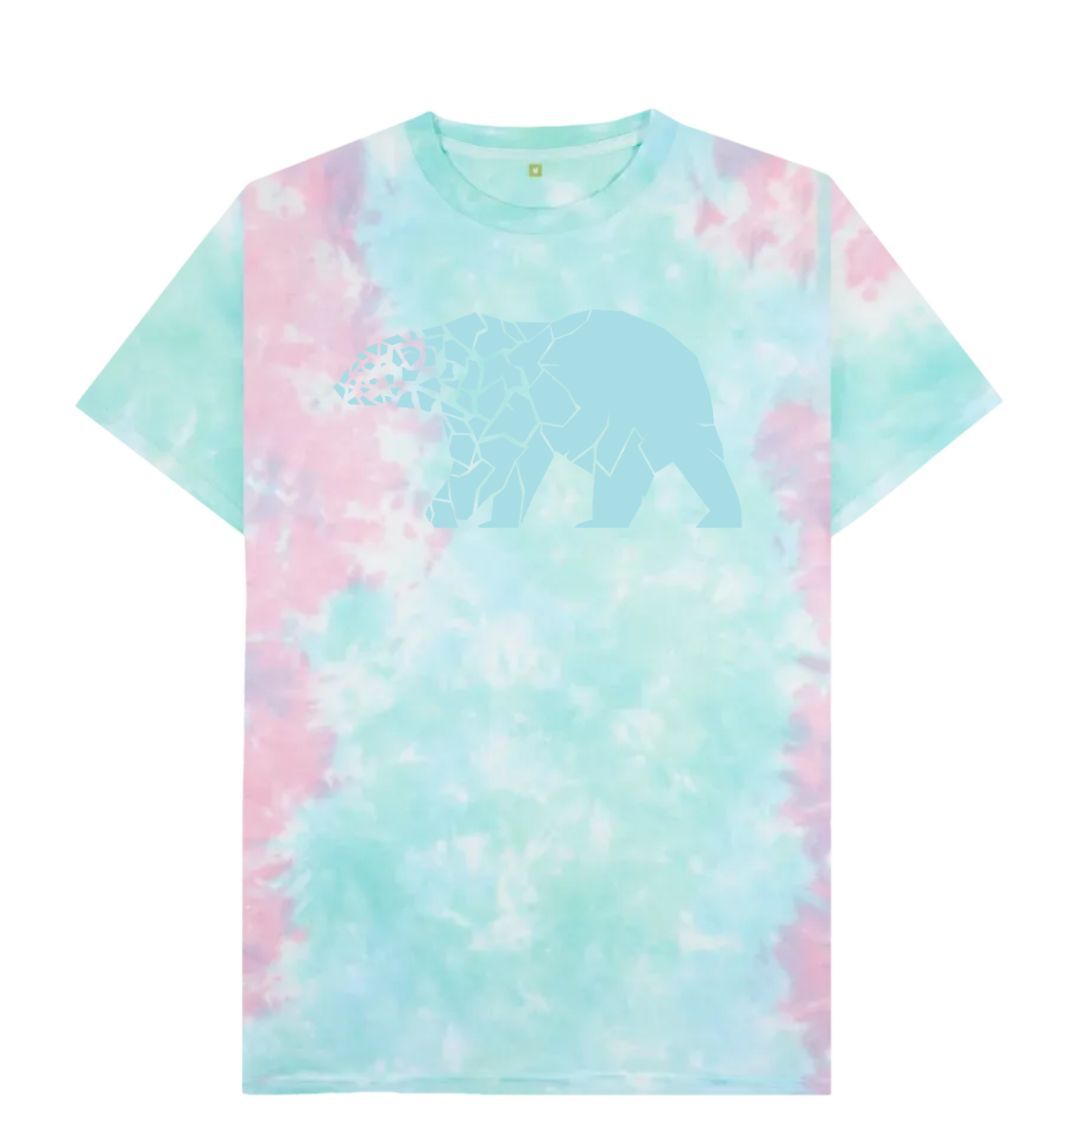 Men's Tie Dye T-shirt with Polar Bear Design - Certified Organic Cotton